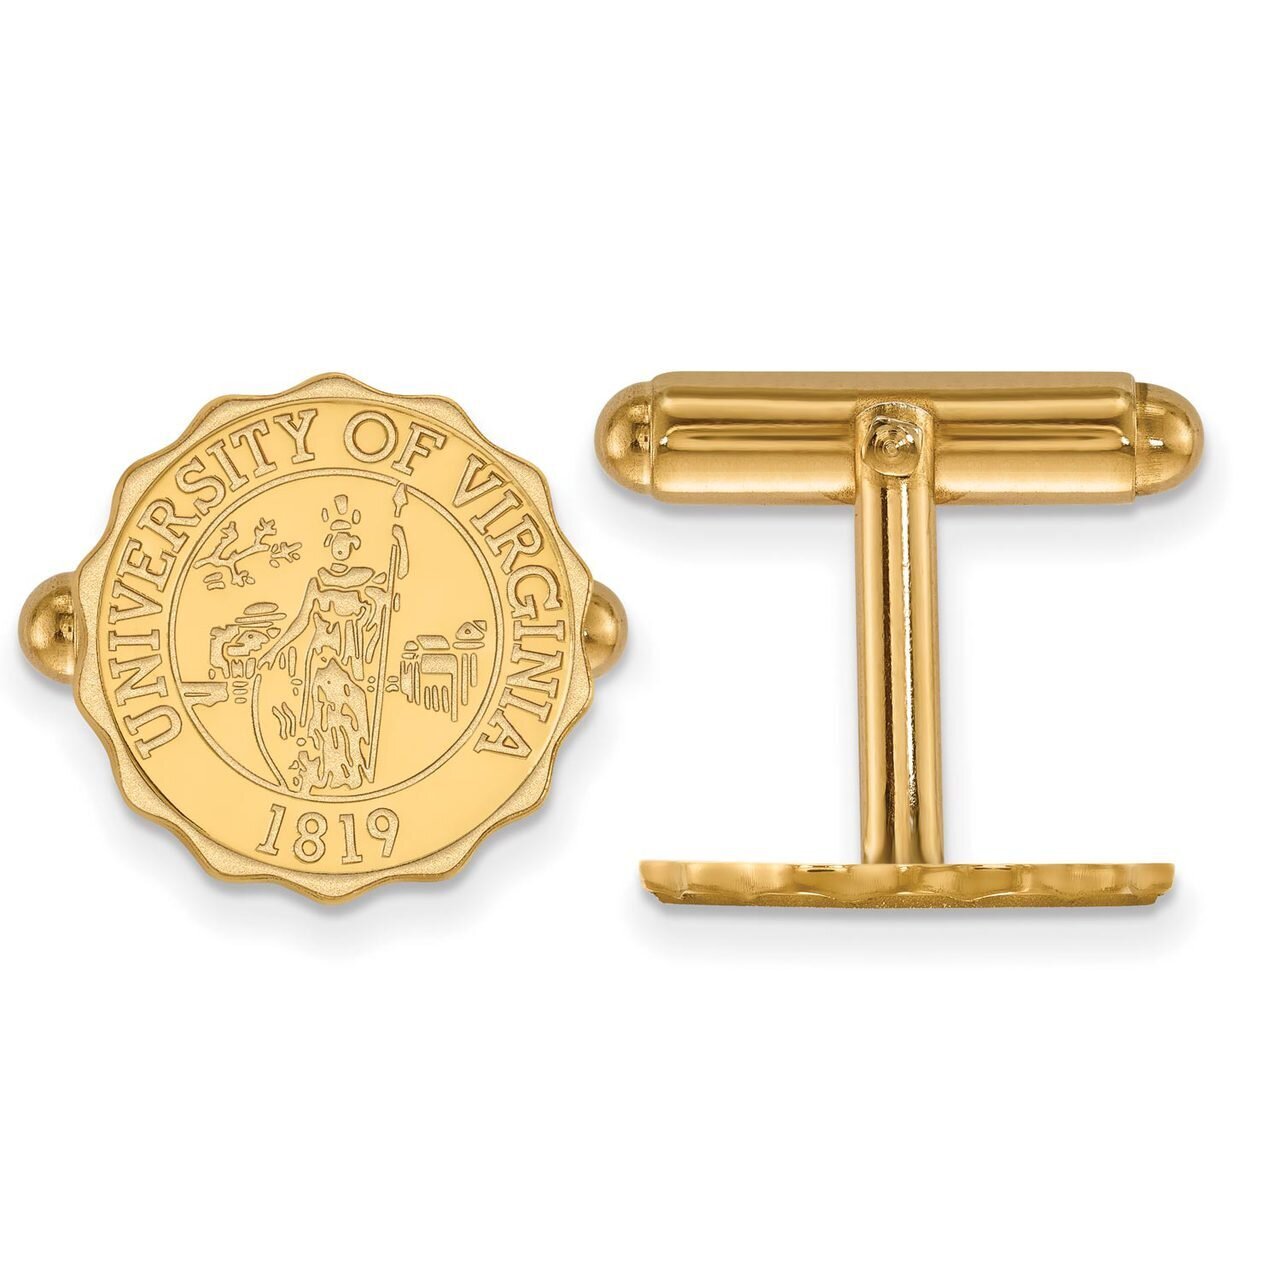 University of Virginia Crest Cufflinks Gold-plated Silver GP069UVA